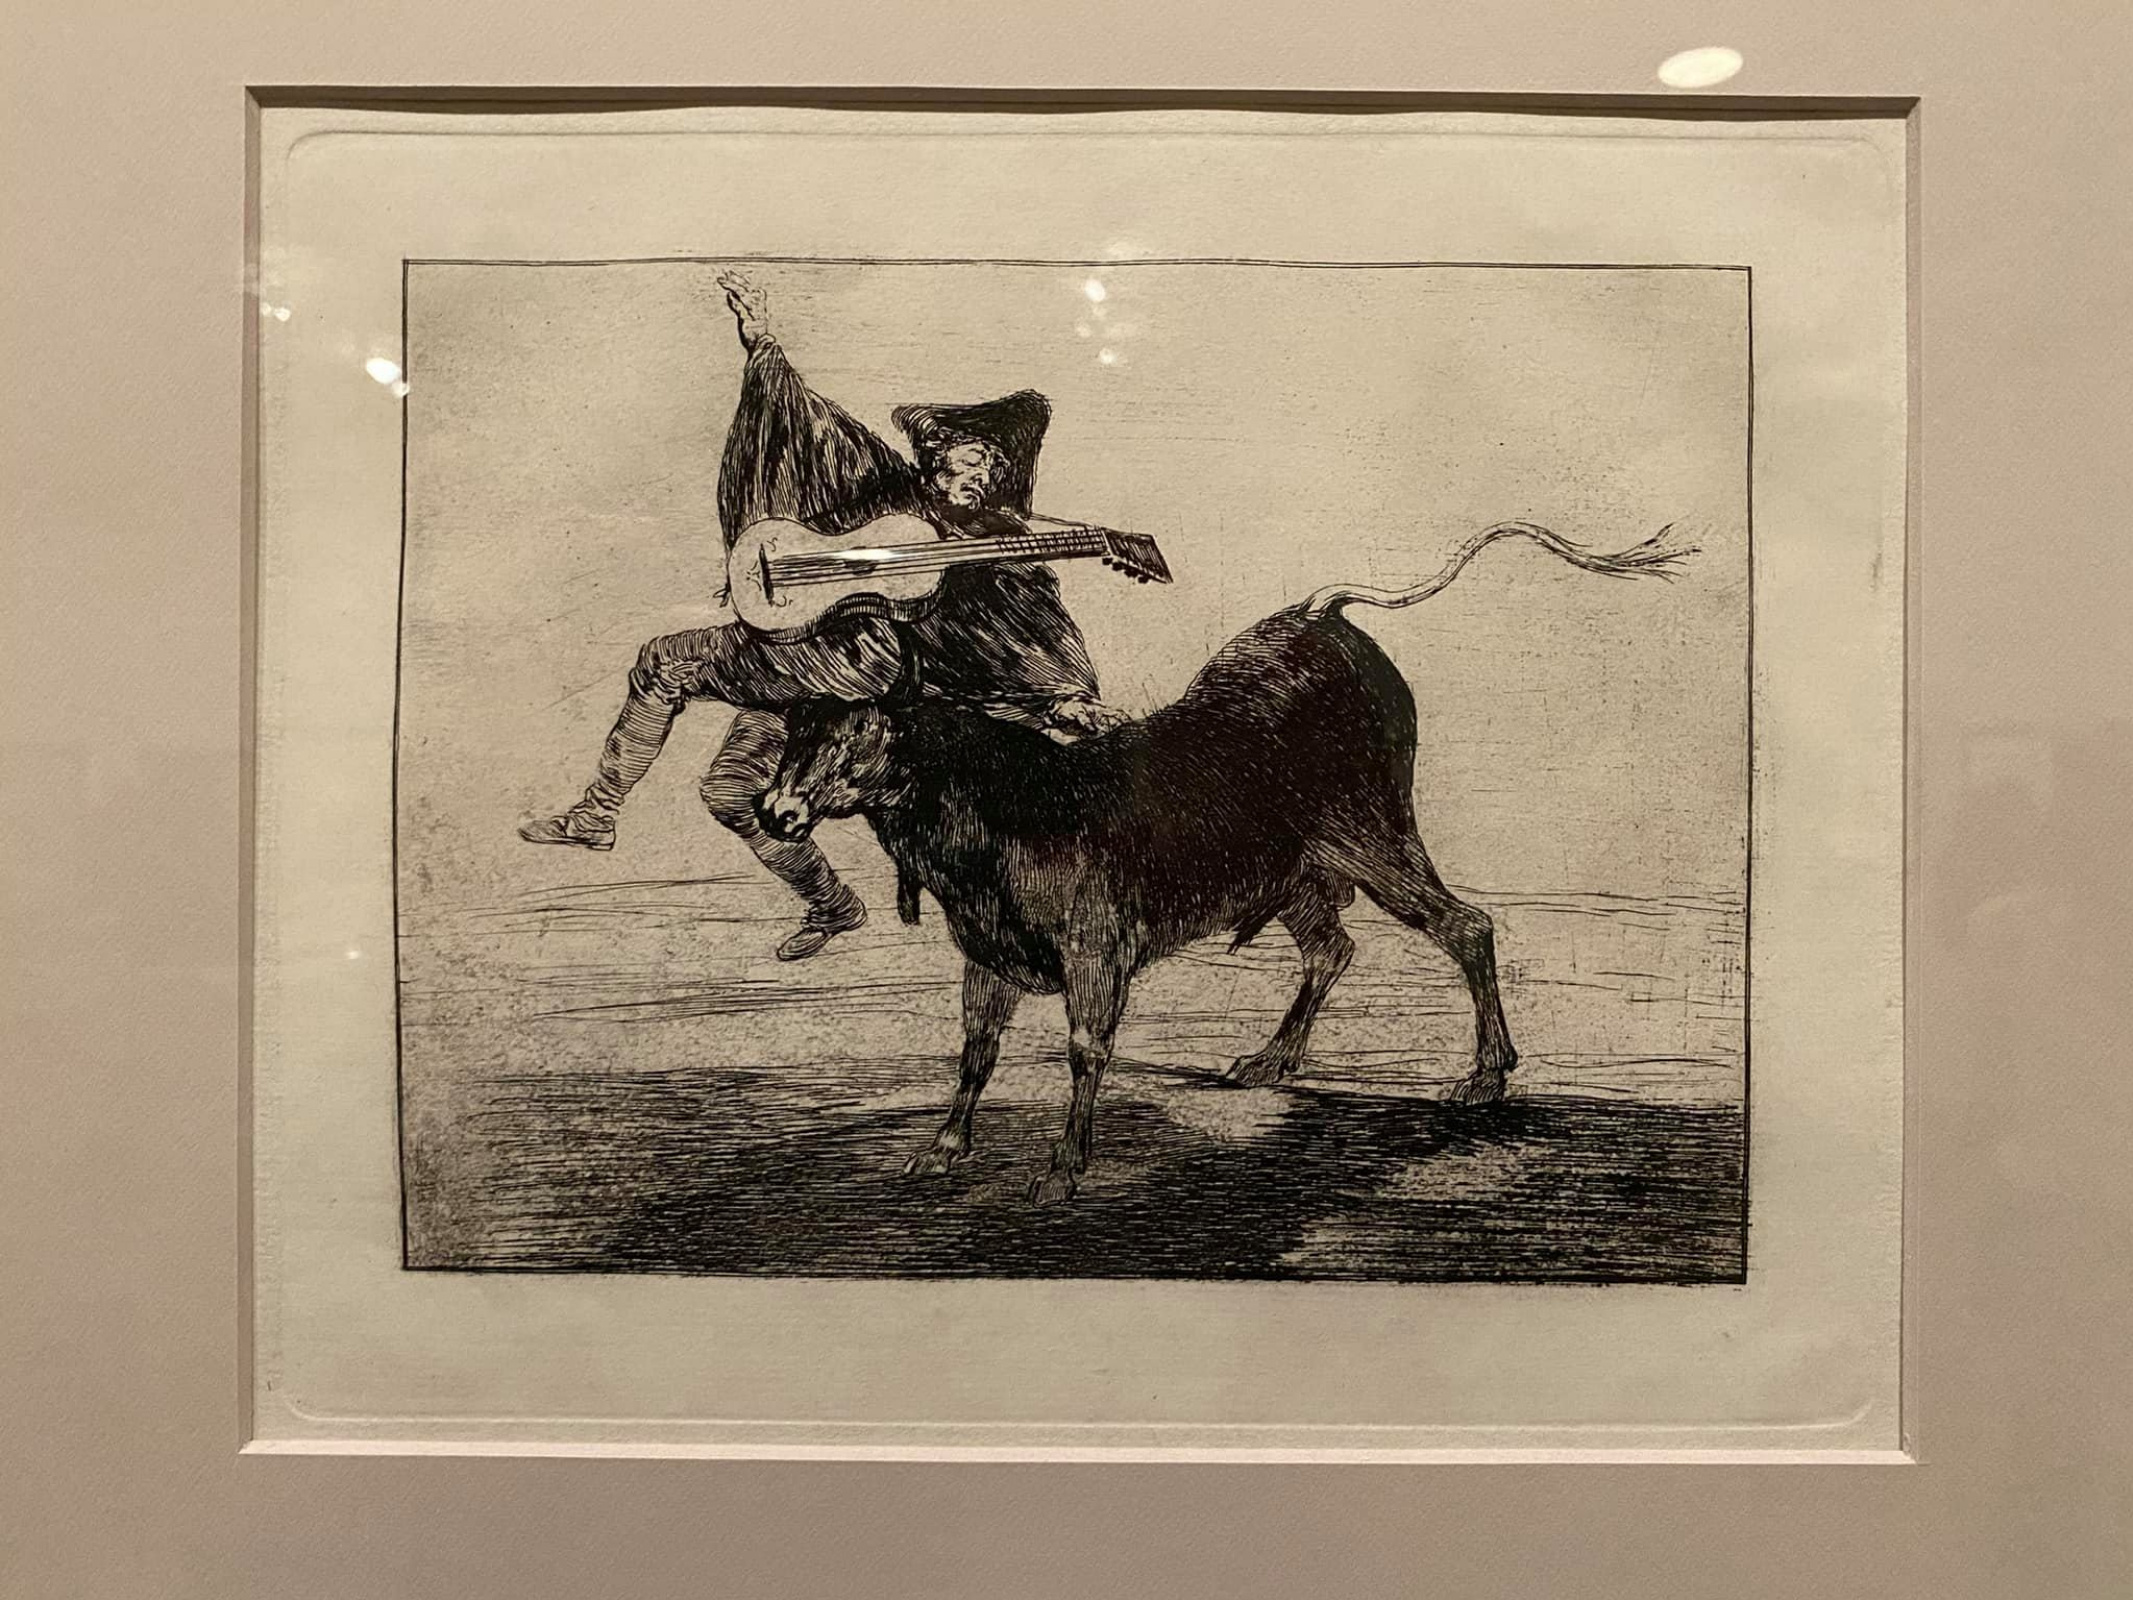 Goya: Graphic Imagination | Arthive